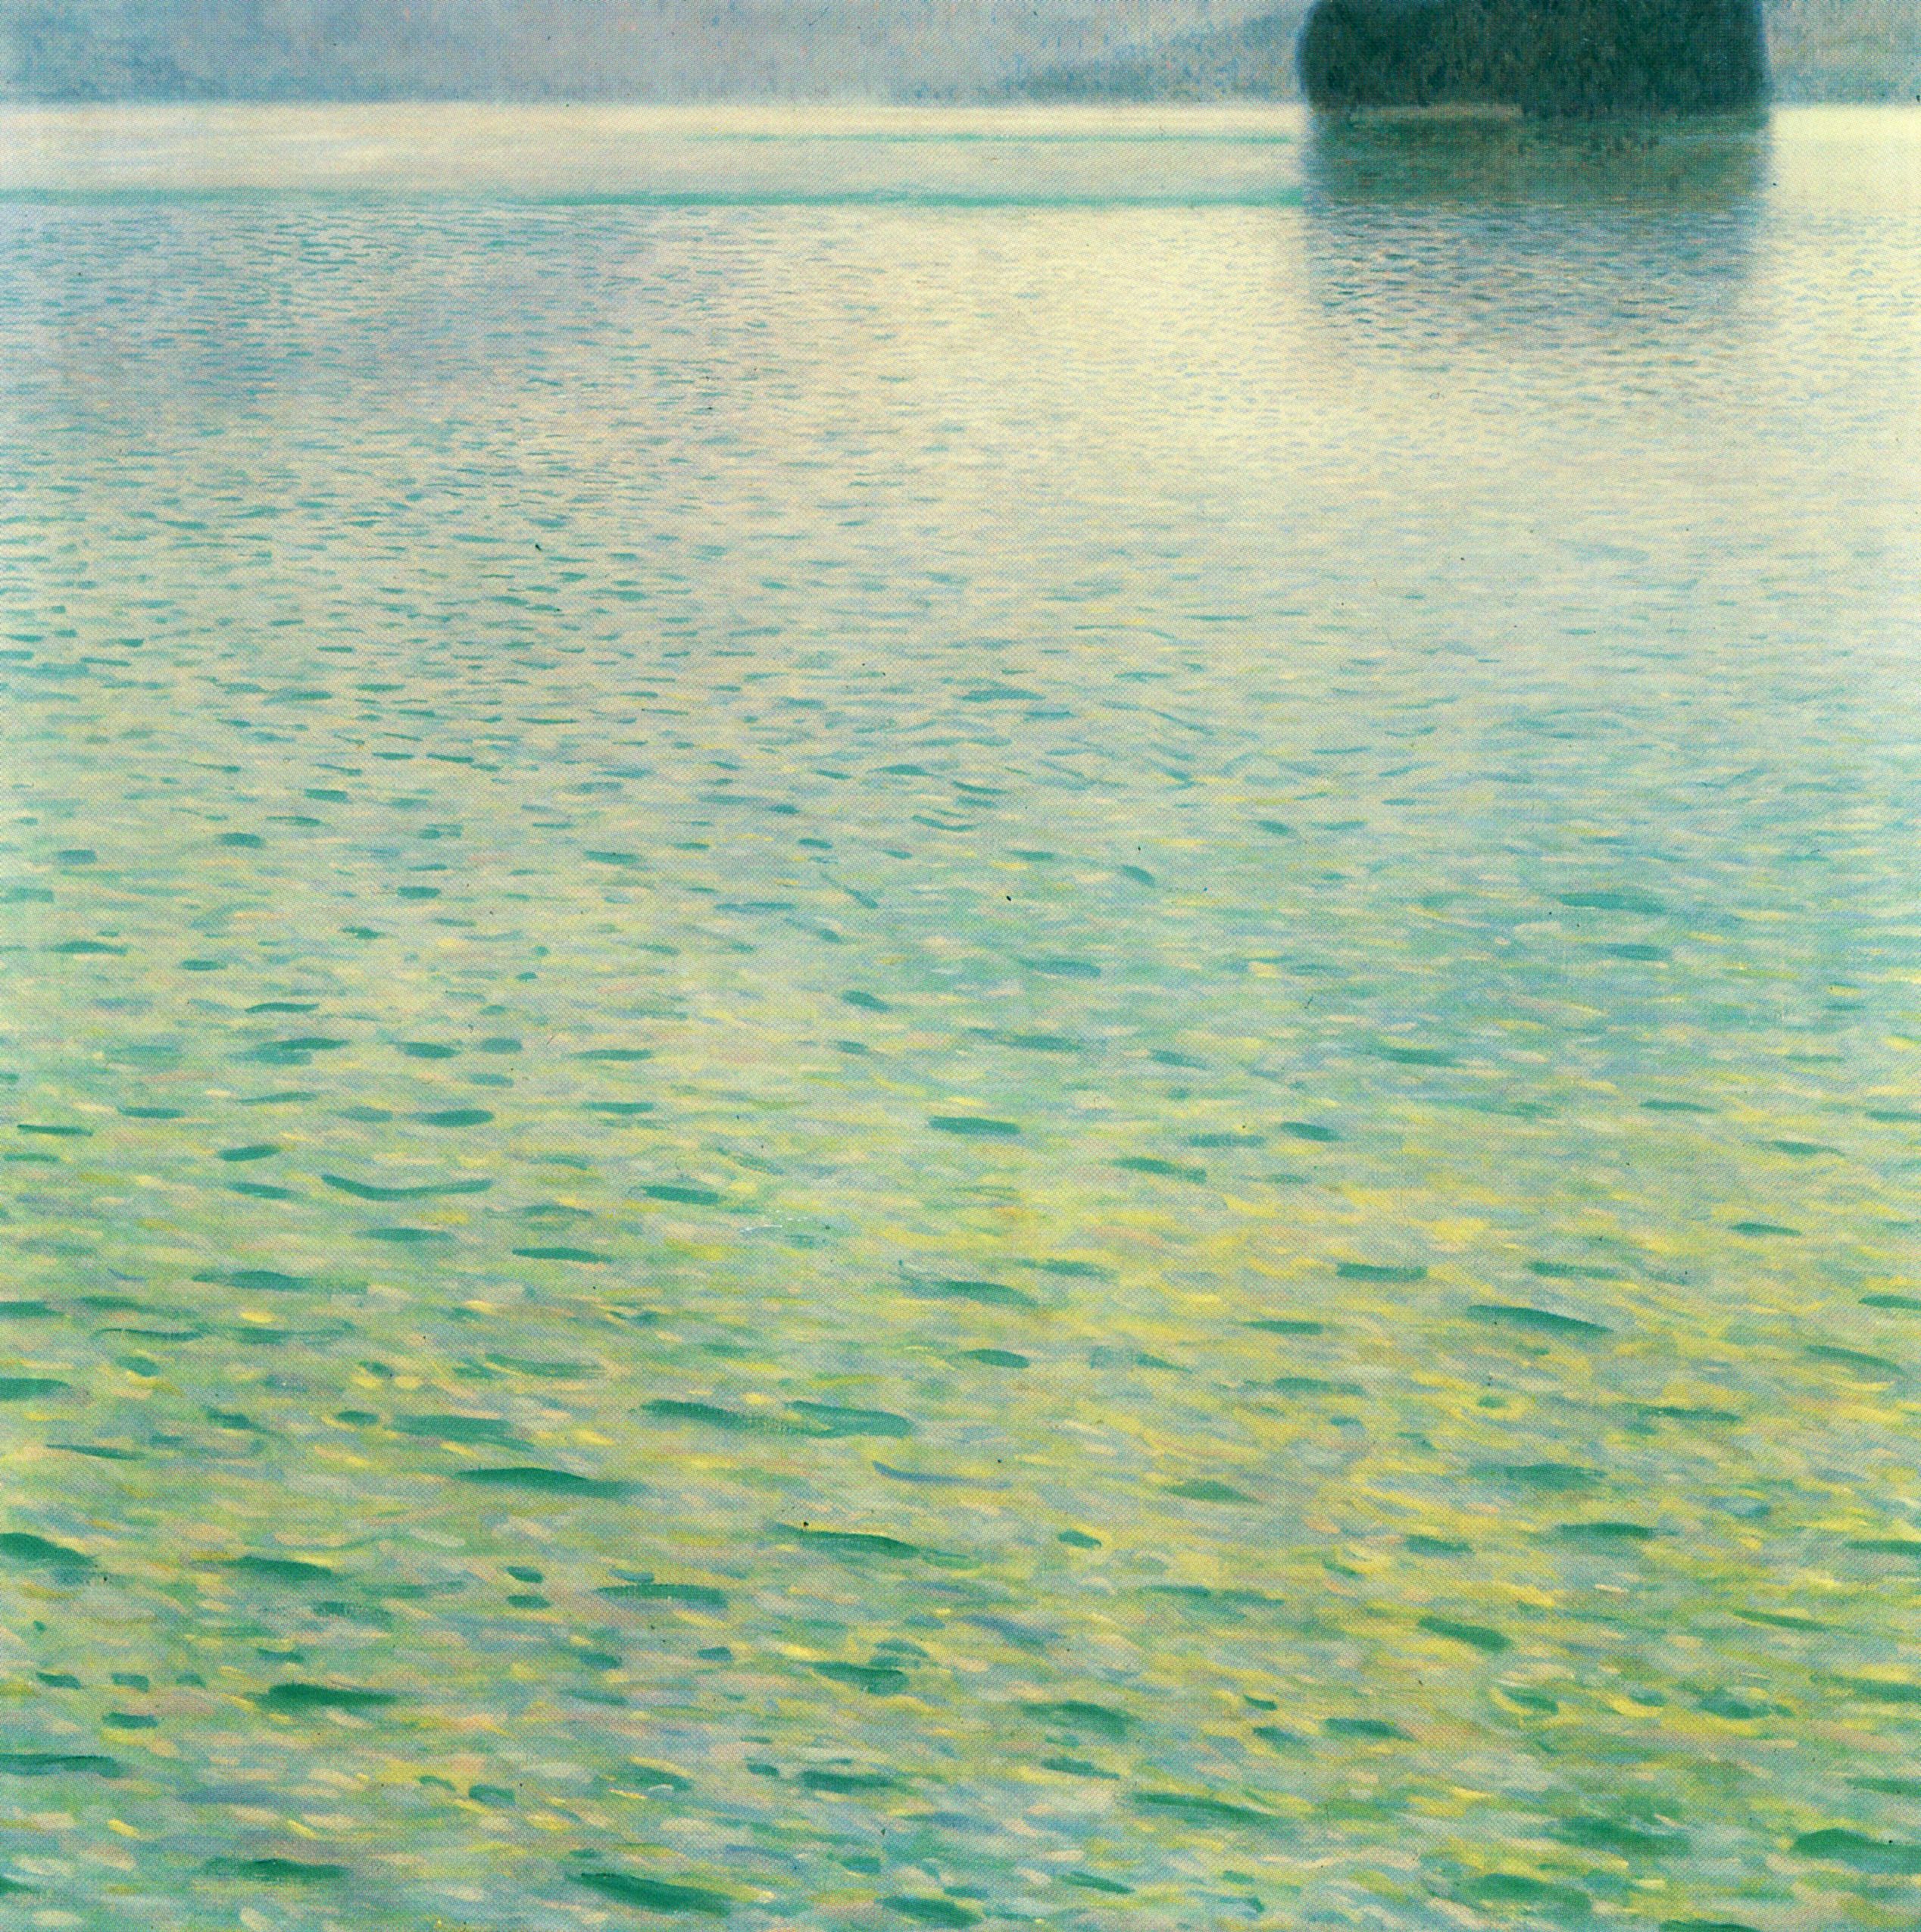 Ile dans l'Attersee by Gustav Klimt - 1901 - 100 x 100 cm collection privée